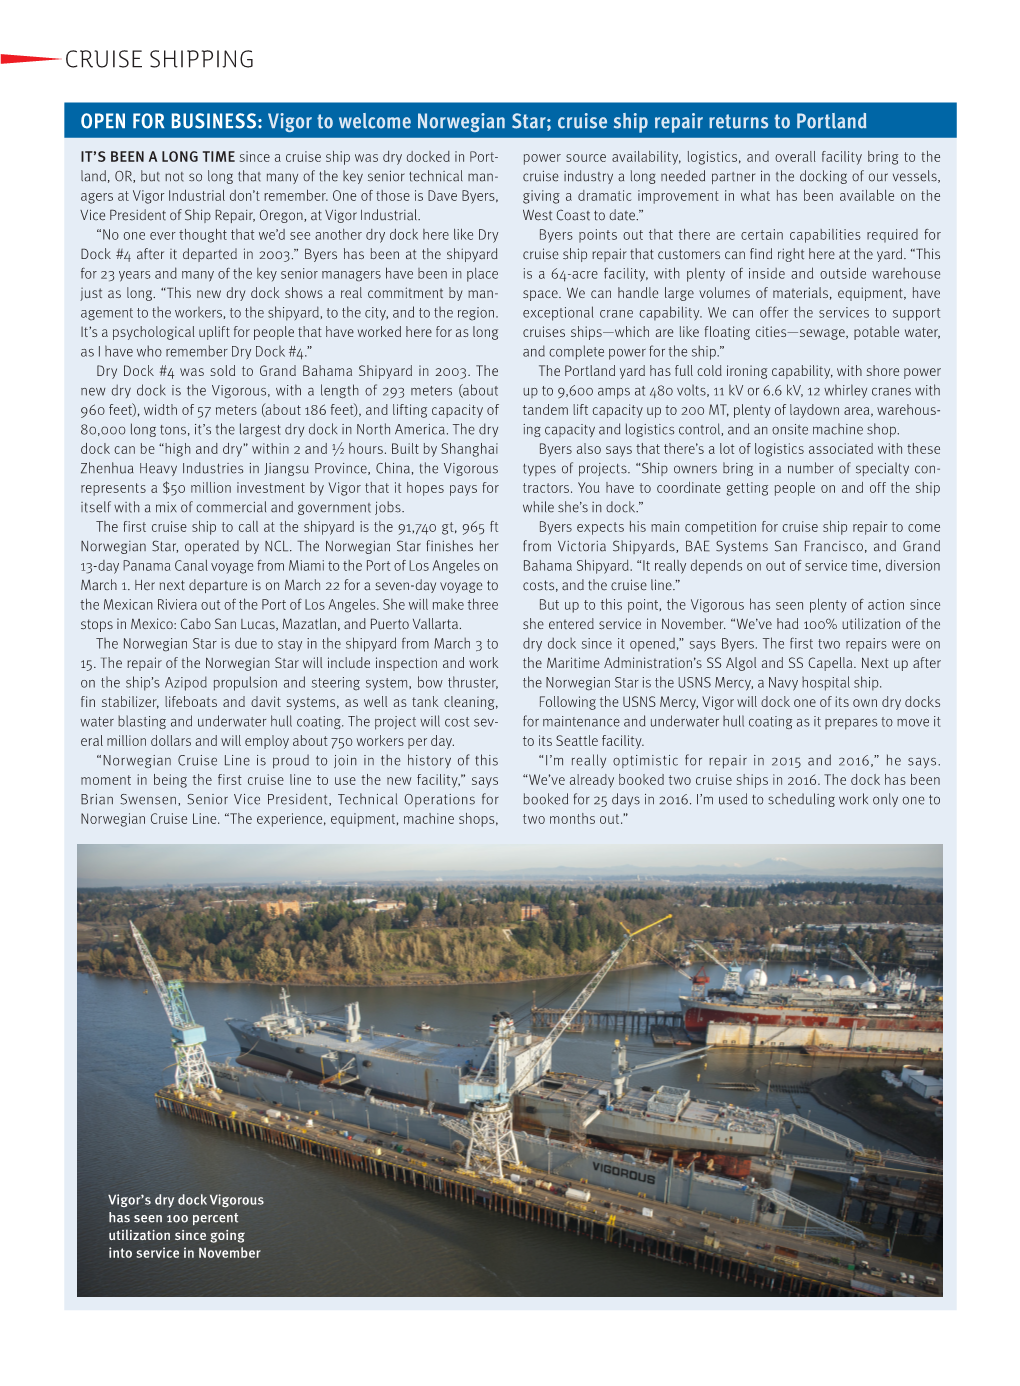 Vigor to Welcome Norwegian Star; Cruise Ship Repair Returns to Portland